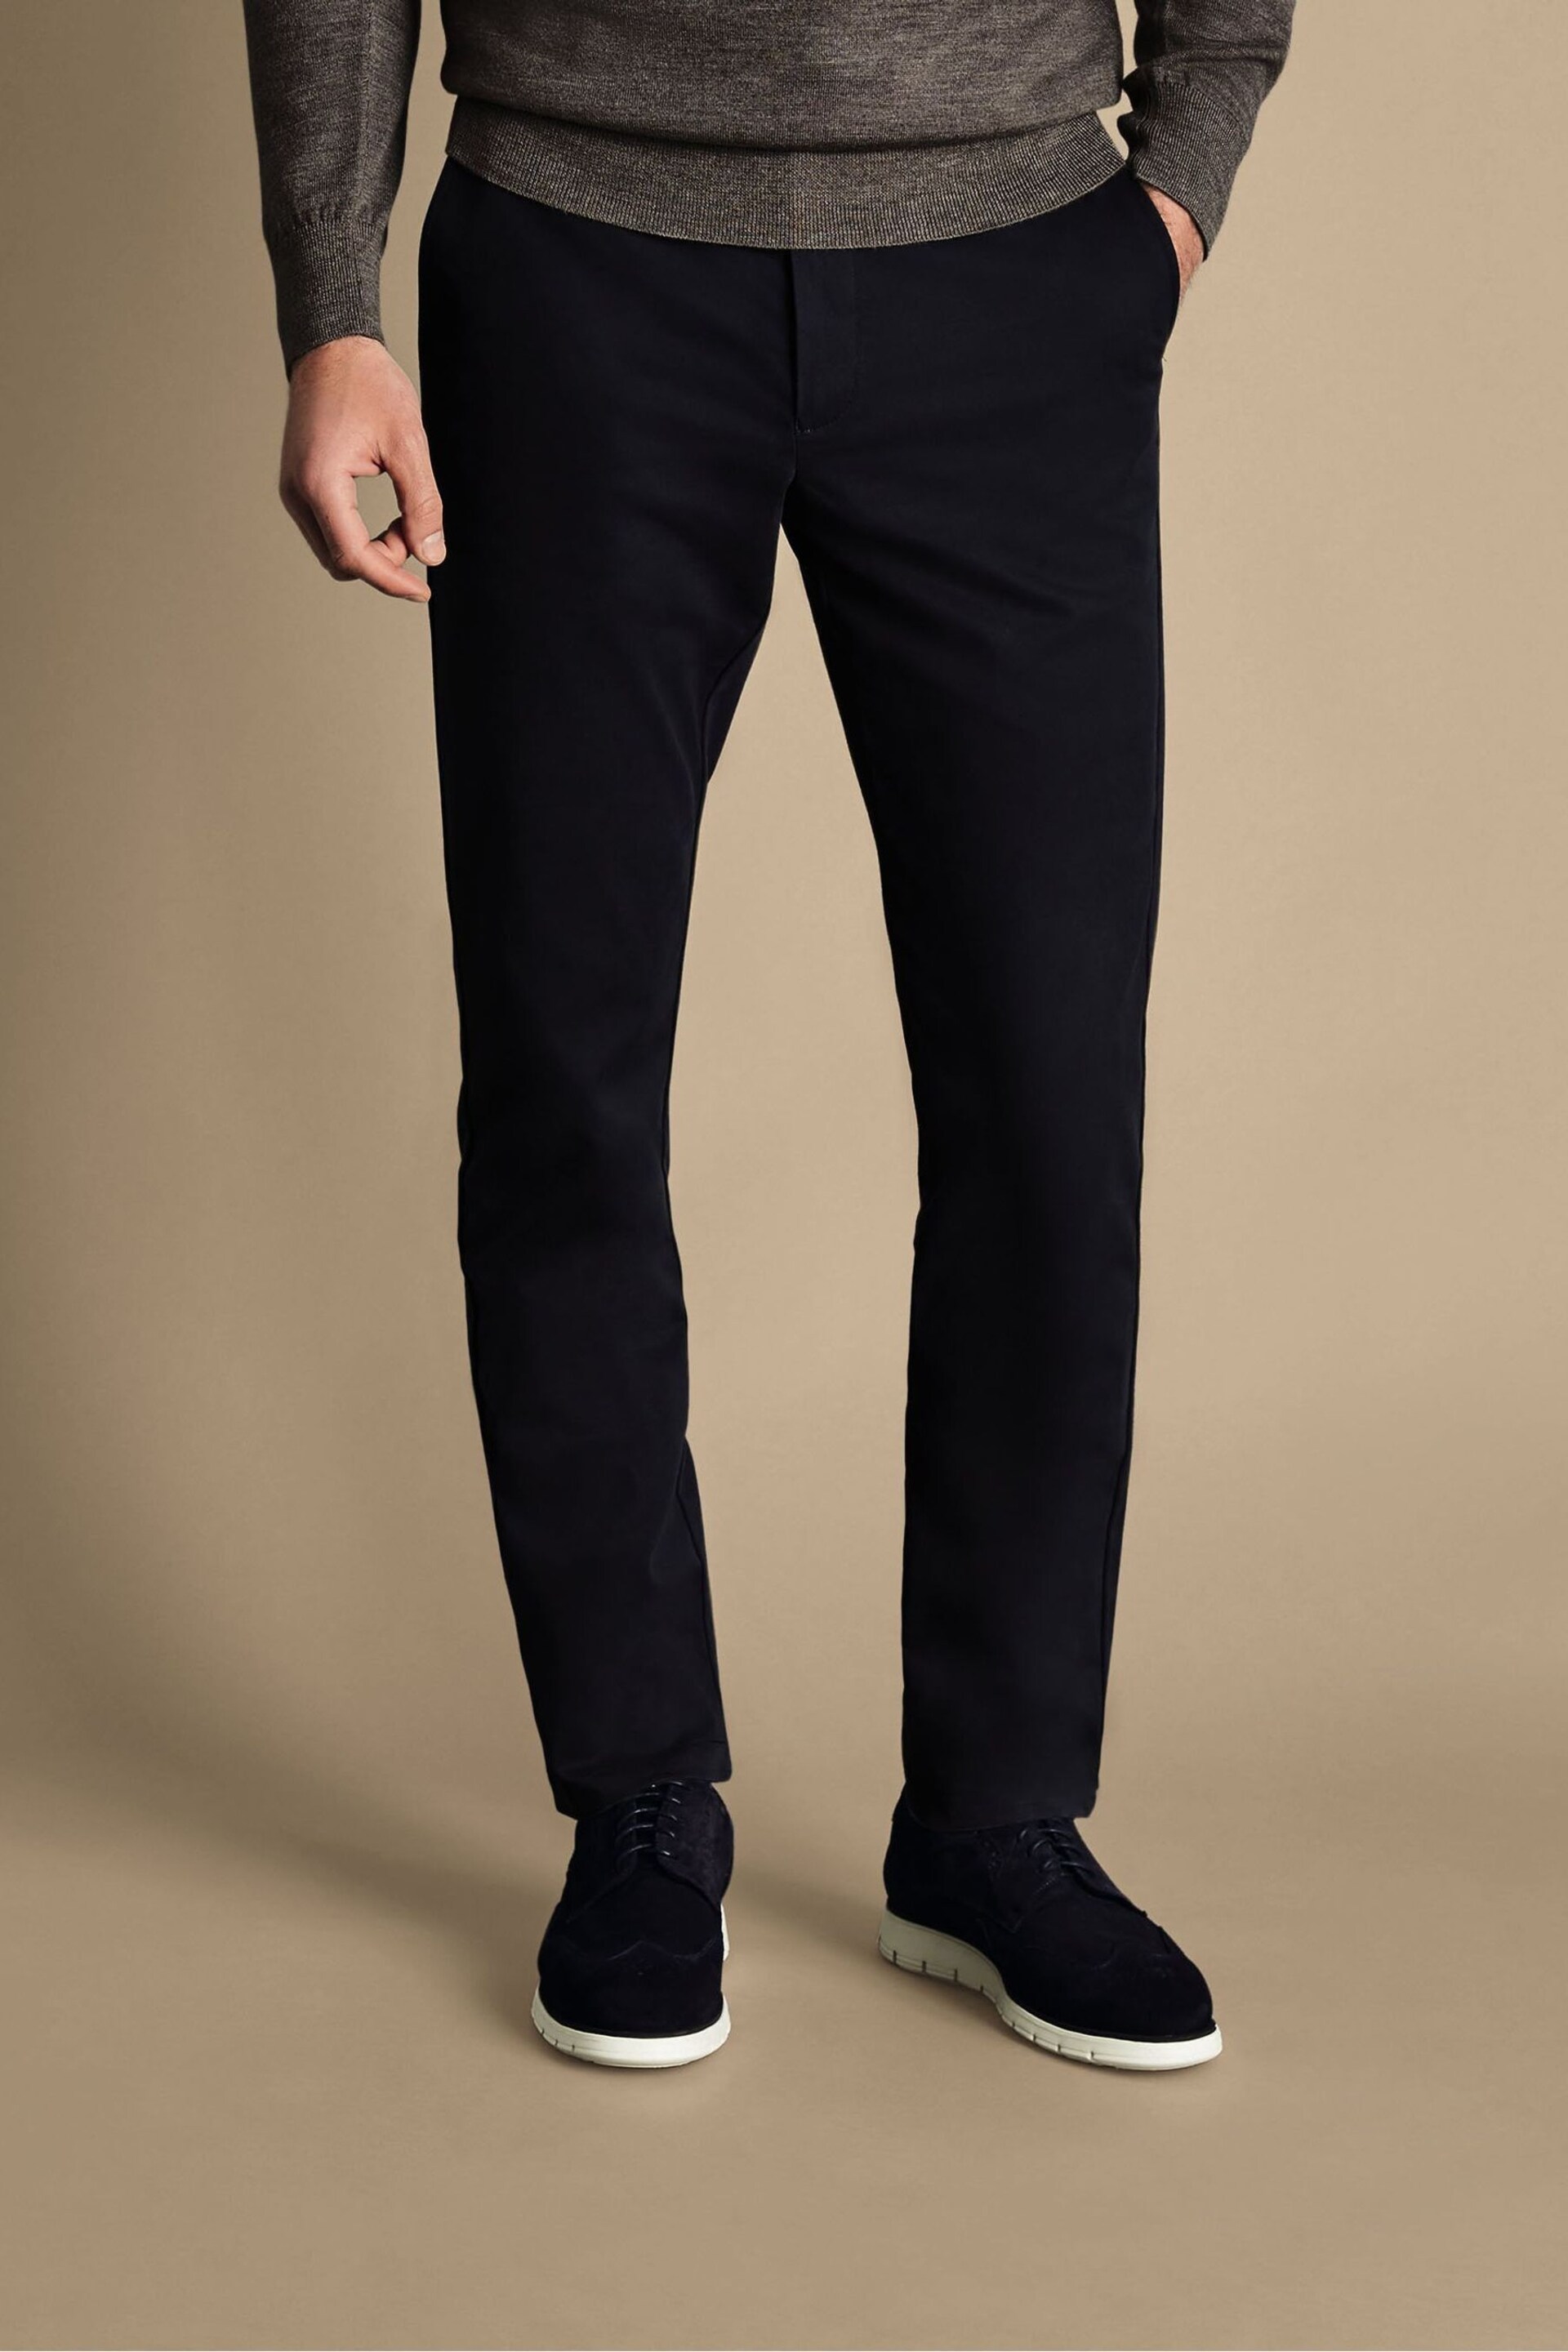 Charles Tyrwhitt Dark black Classic Fit Ultimate non-iron Chino Trousers - Image 1 of 5